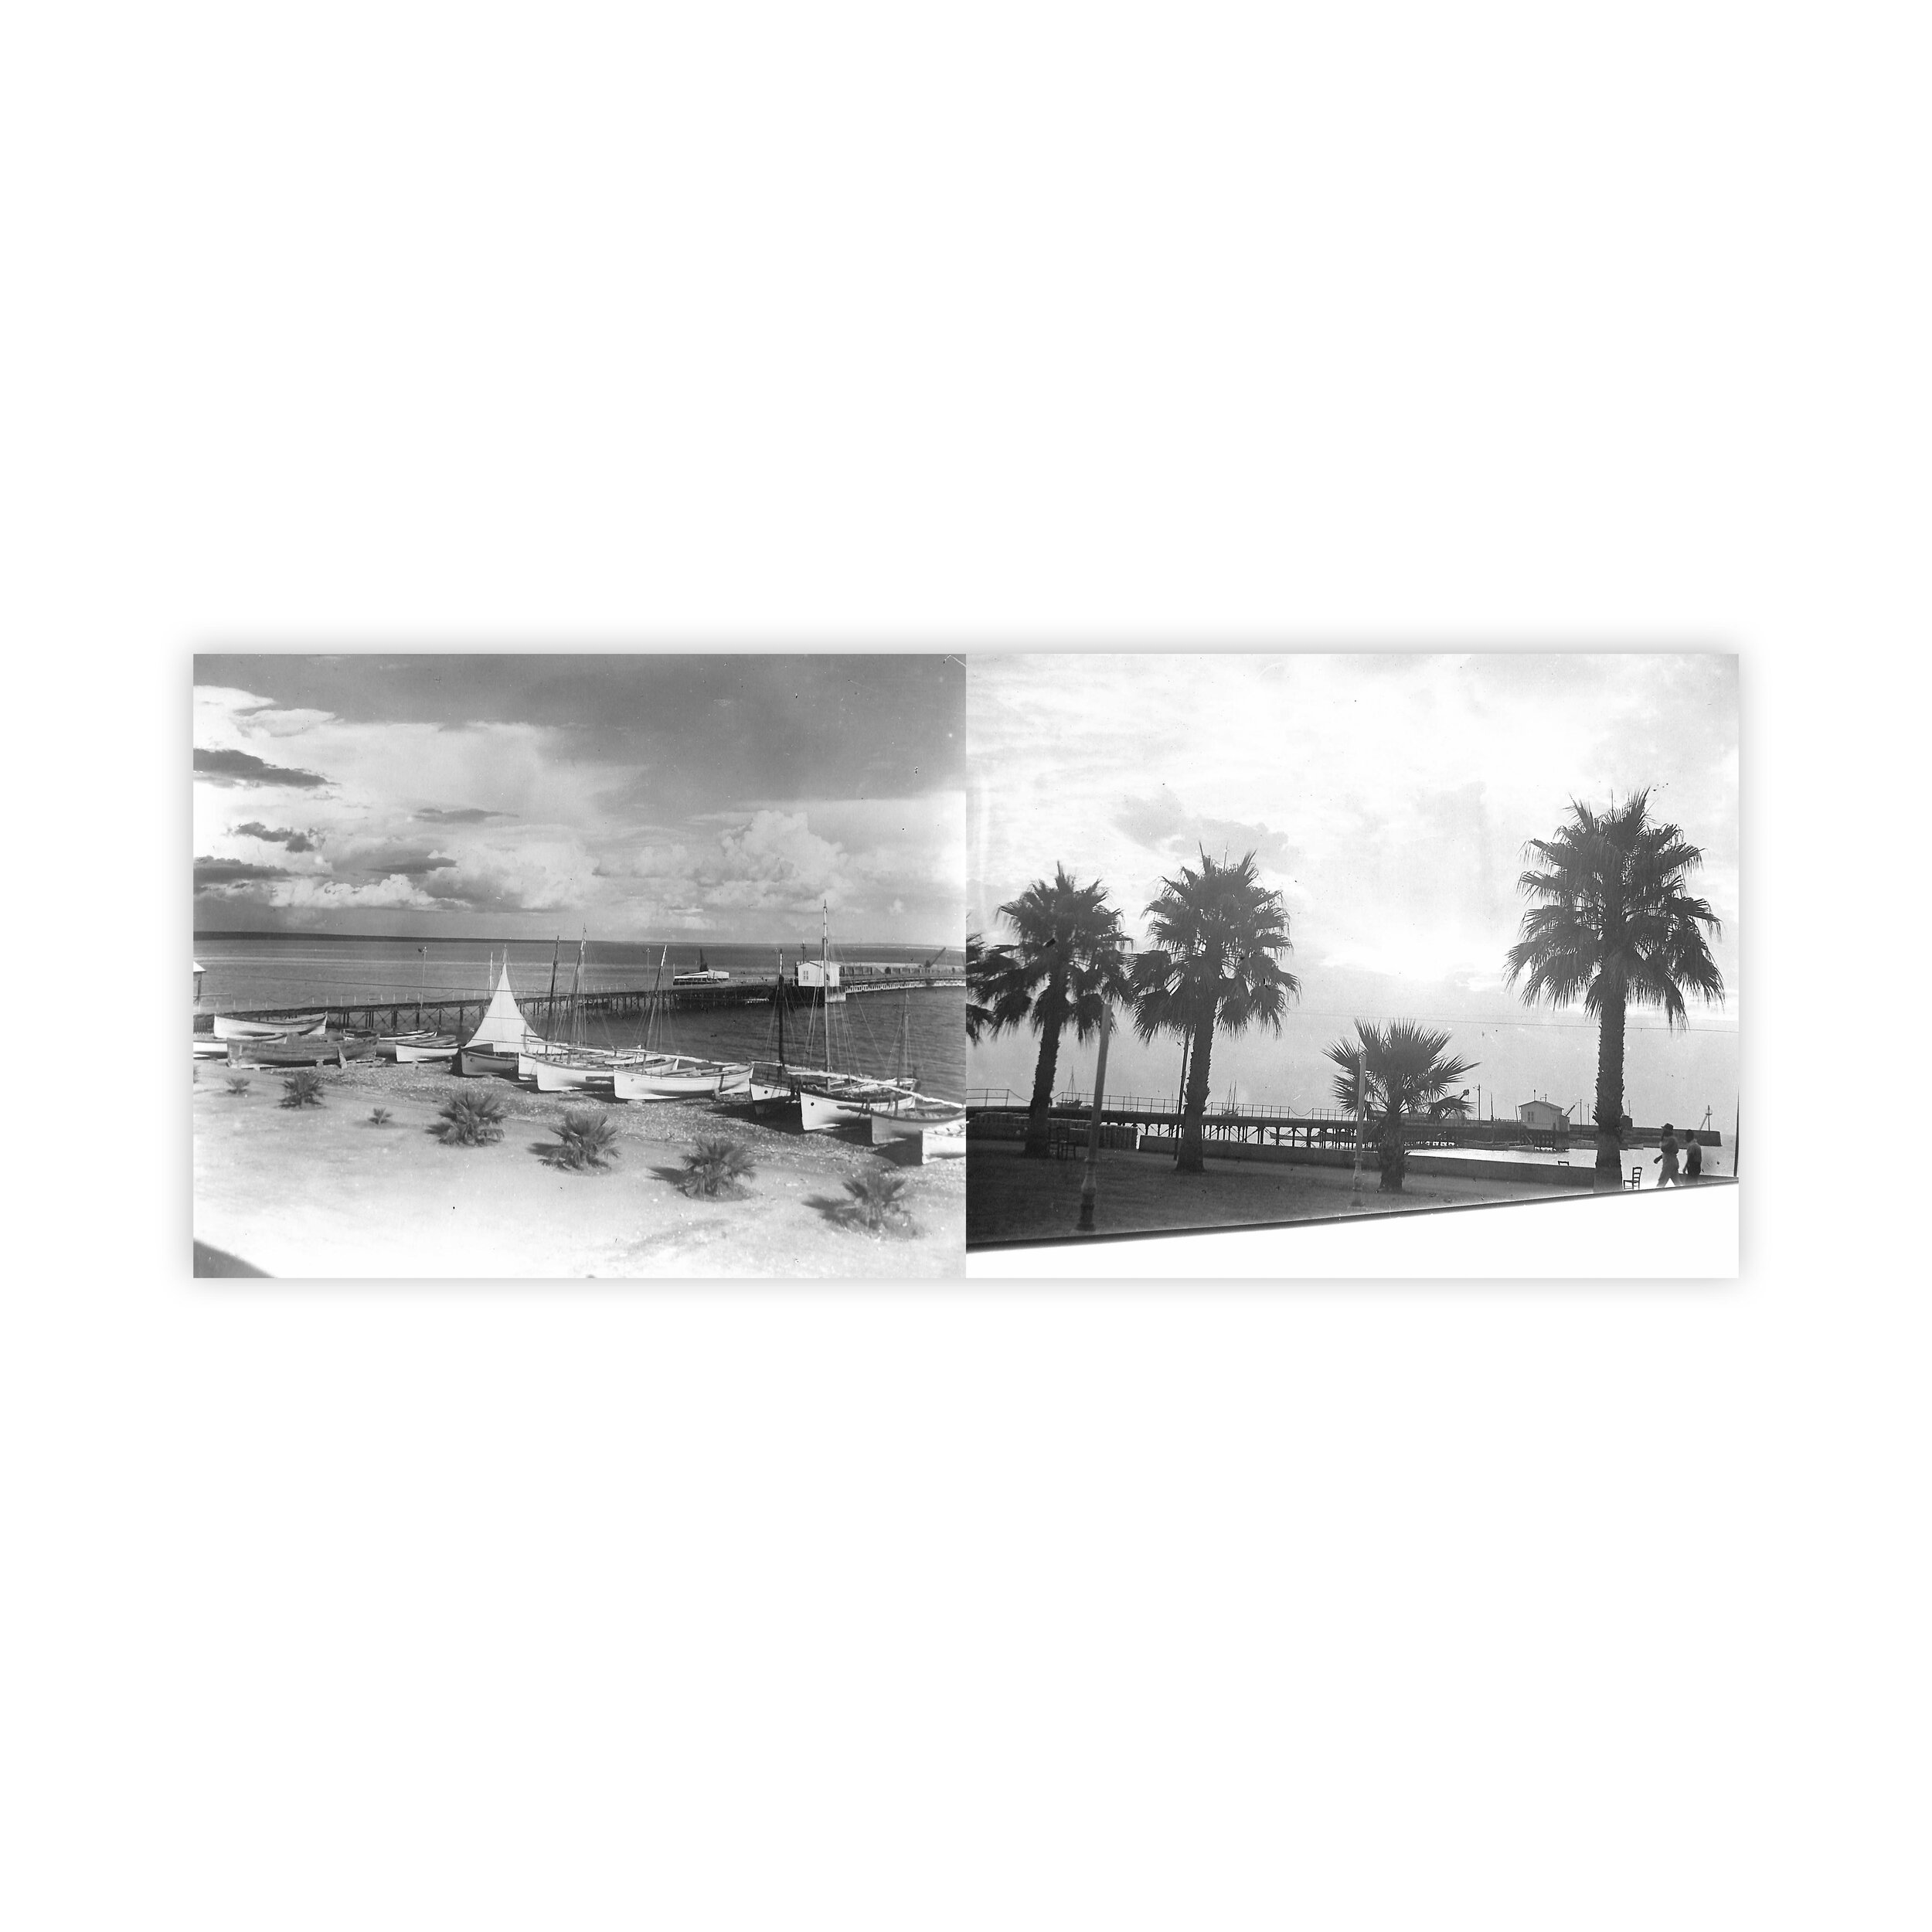  Post-card, Pier - Larnaca, 1920s / Photograph, Pier - Larnaca, 1950s 